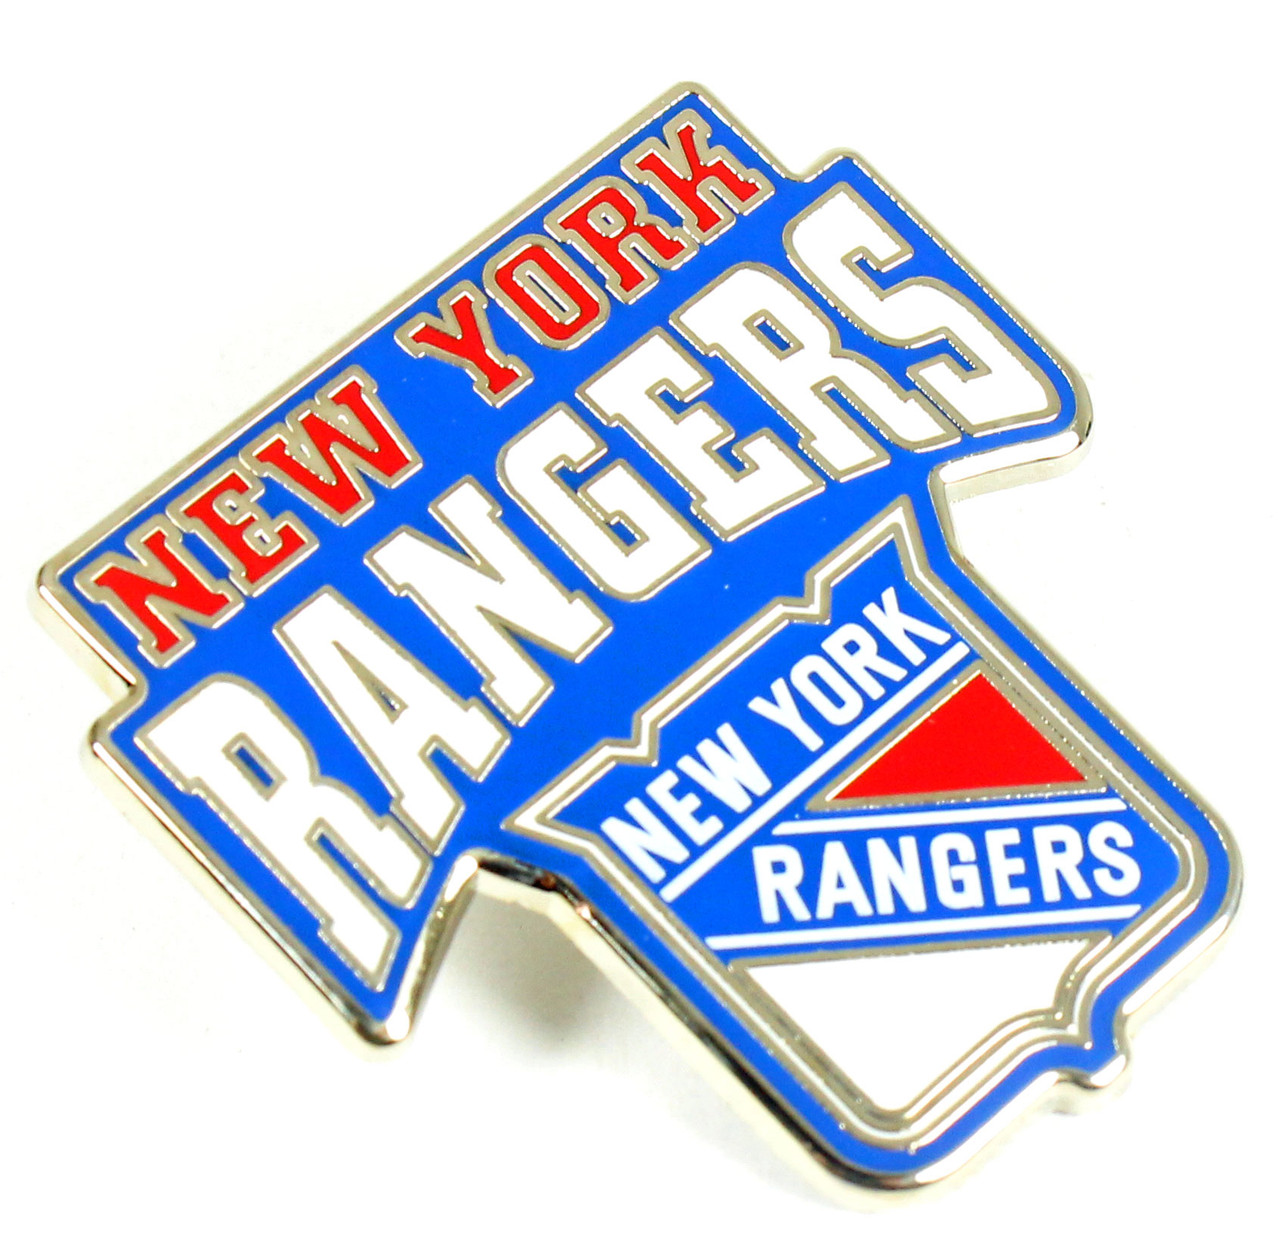 New York Rangers Logo Patch